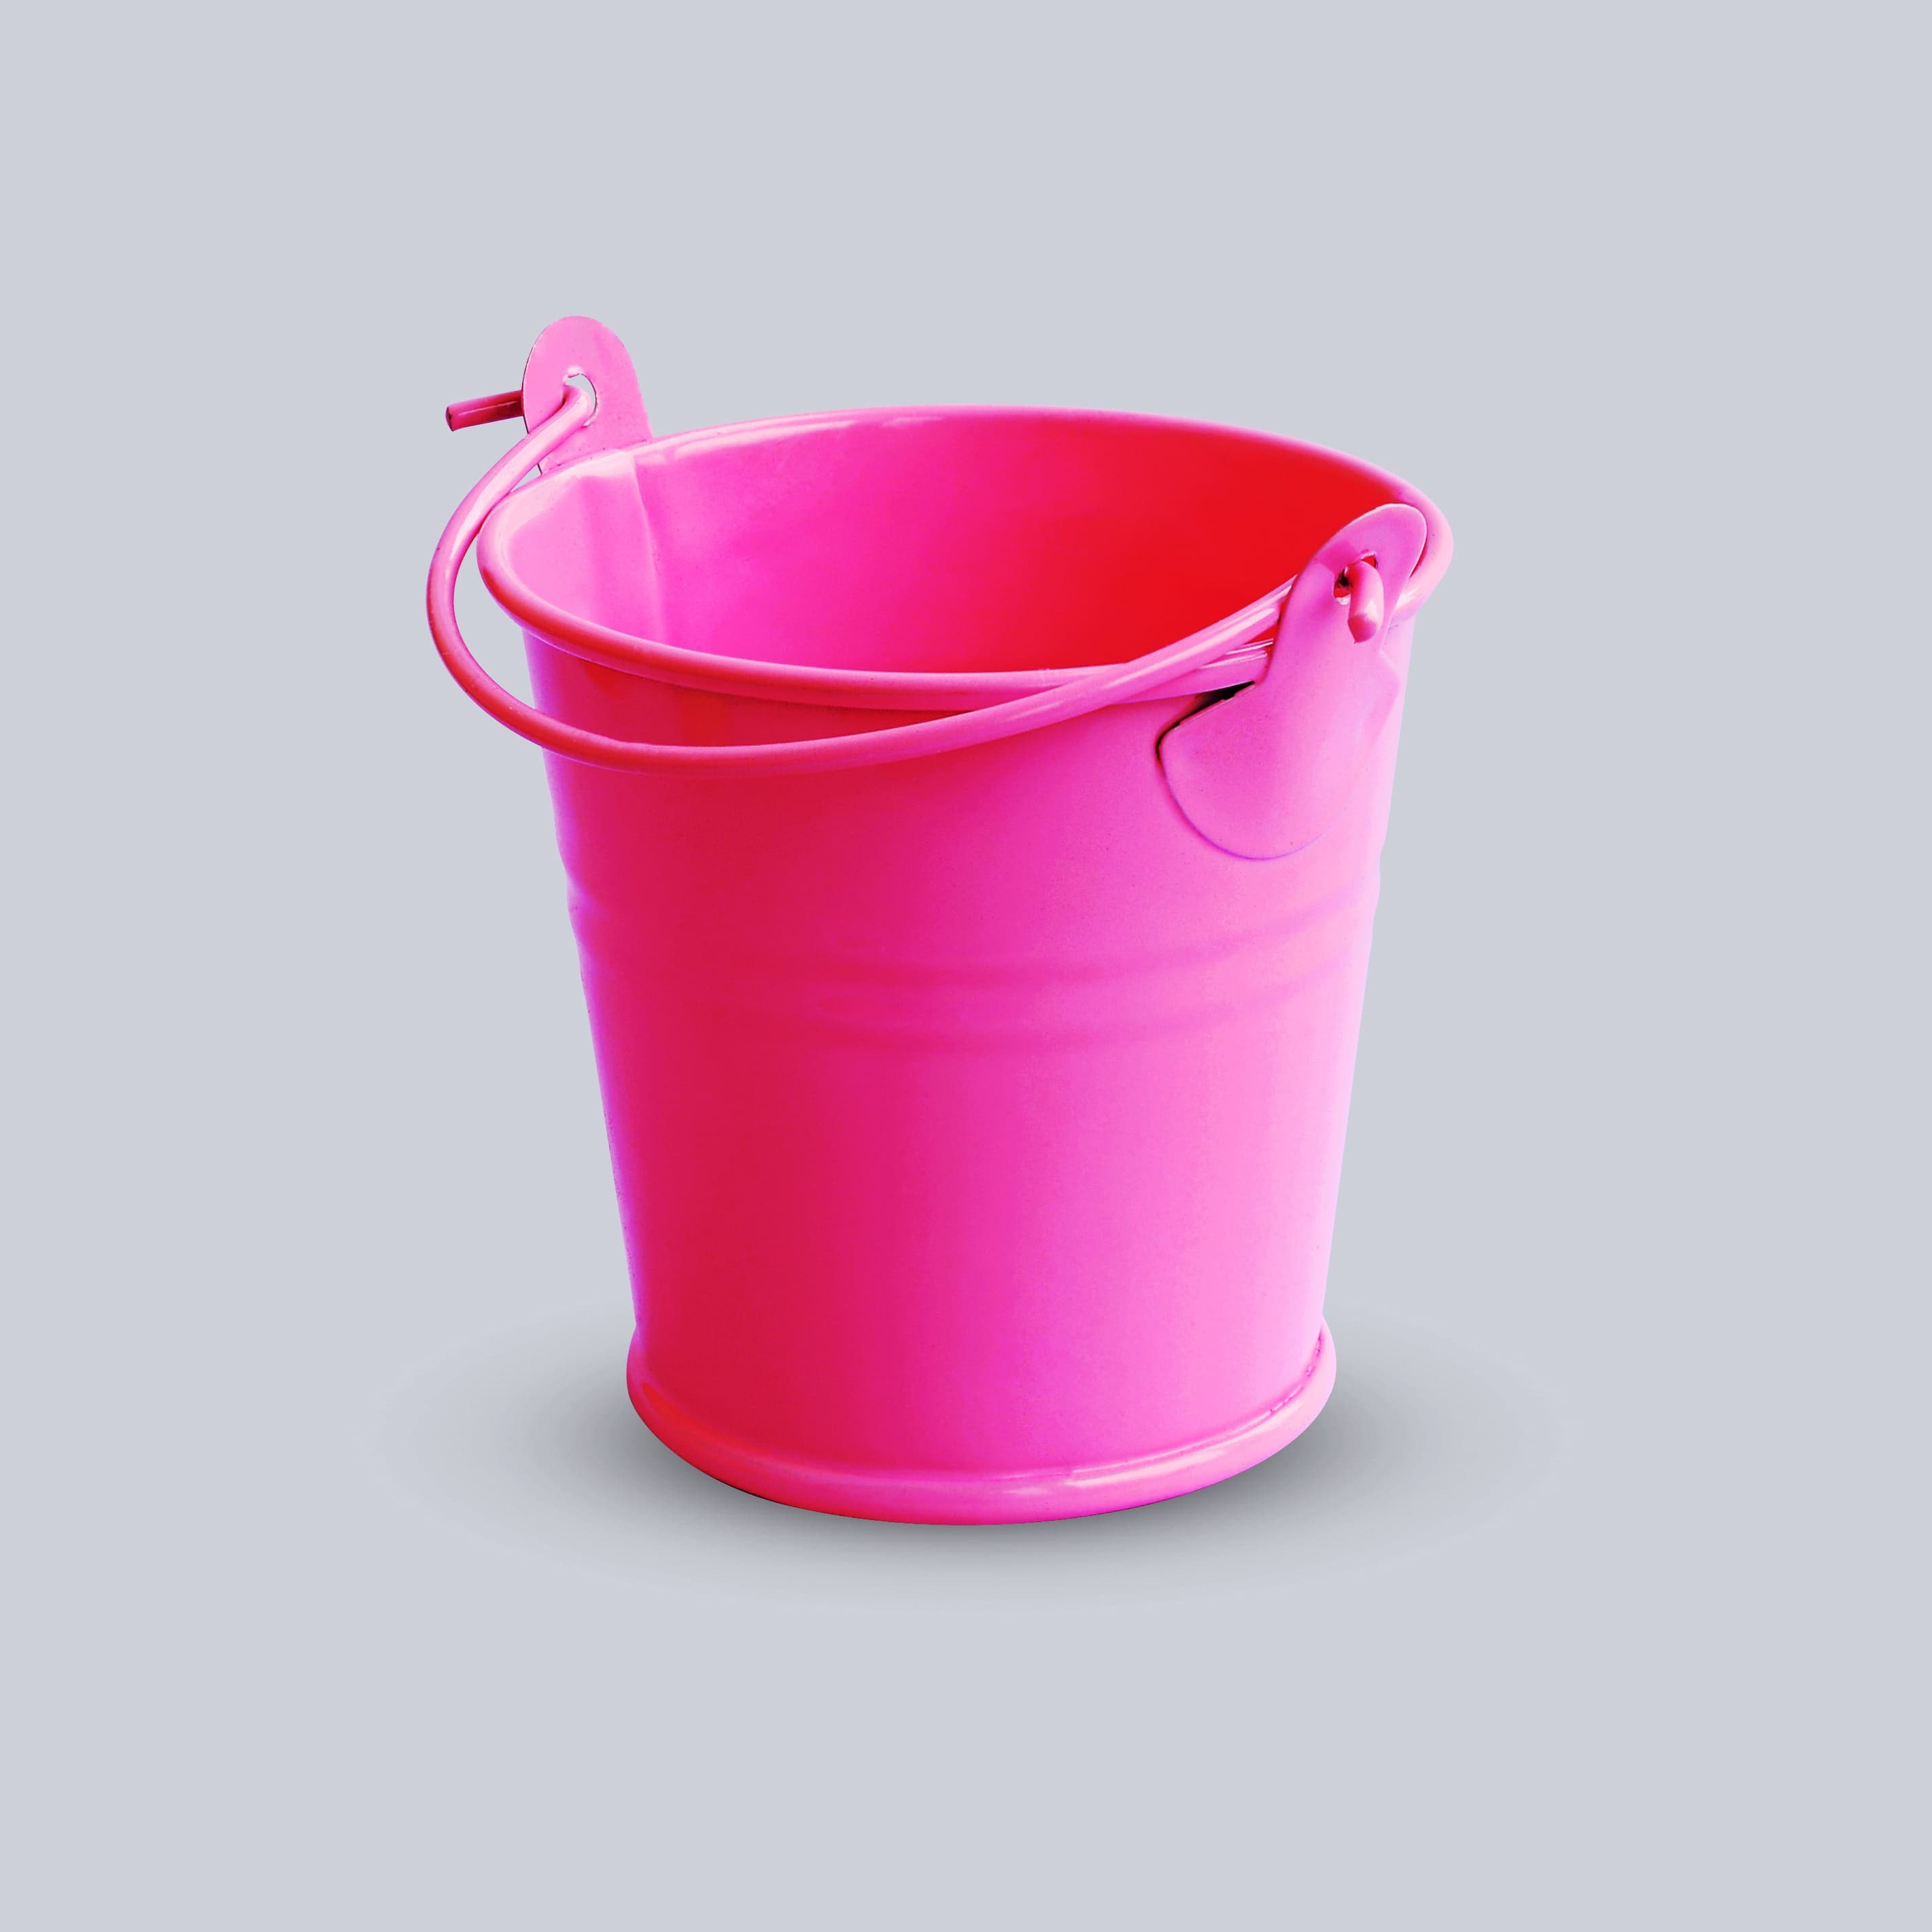 Rust-Oleum Stops Rust Gloss Poppy Pink Spray Paint (NET WT. 12-oz